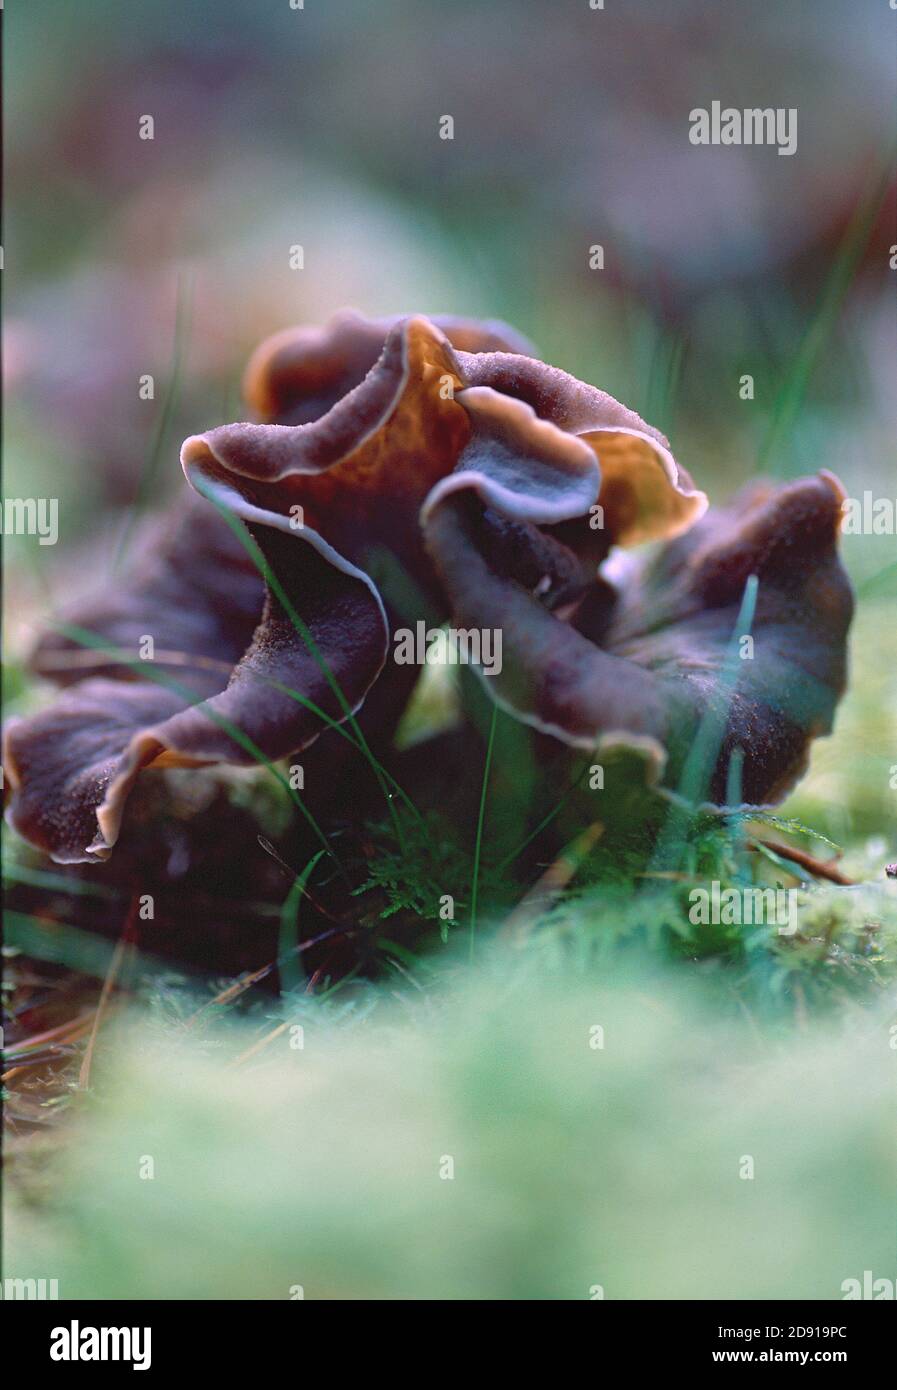 Craterellus cornucopioides edible mushrooms plants growing in nature.  black chanterelle, black trumpet etc Stock Photo